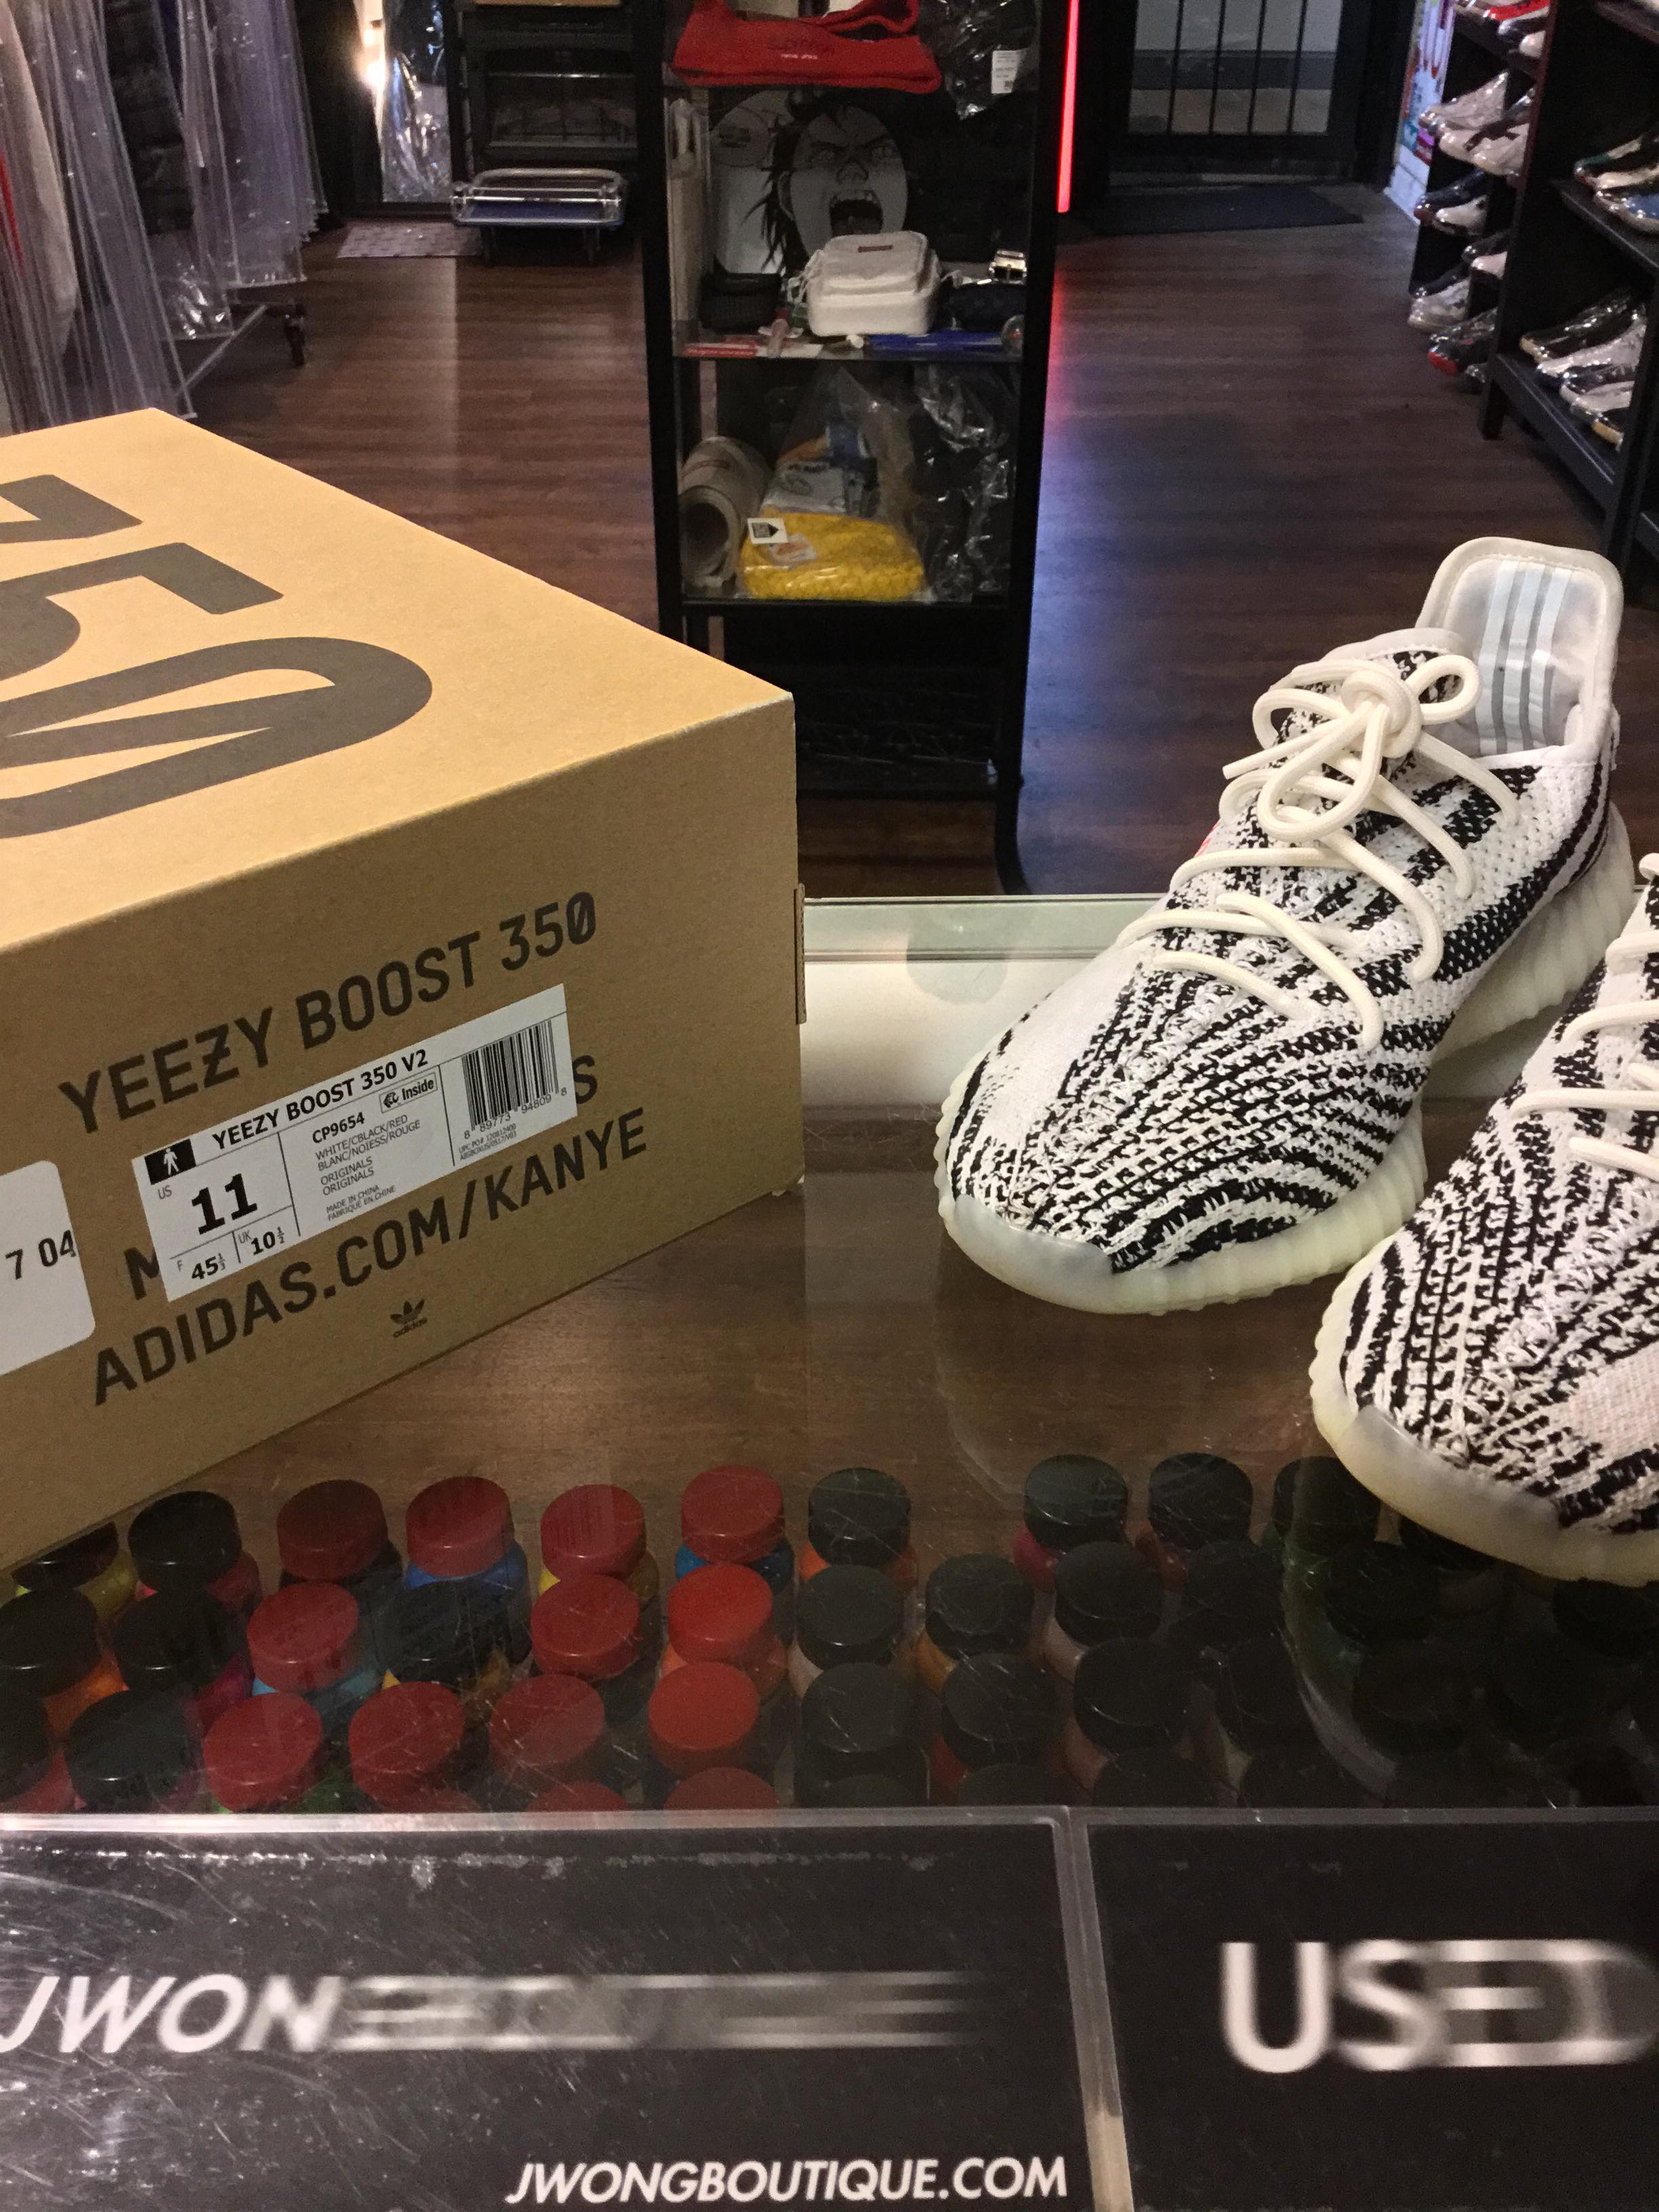 Múltiple acortar trolebús 2018 Adidas Yeezy Boost 350 V2 Zebra Black White - Jwong Boutique